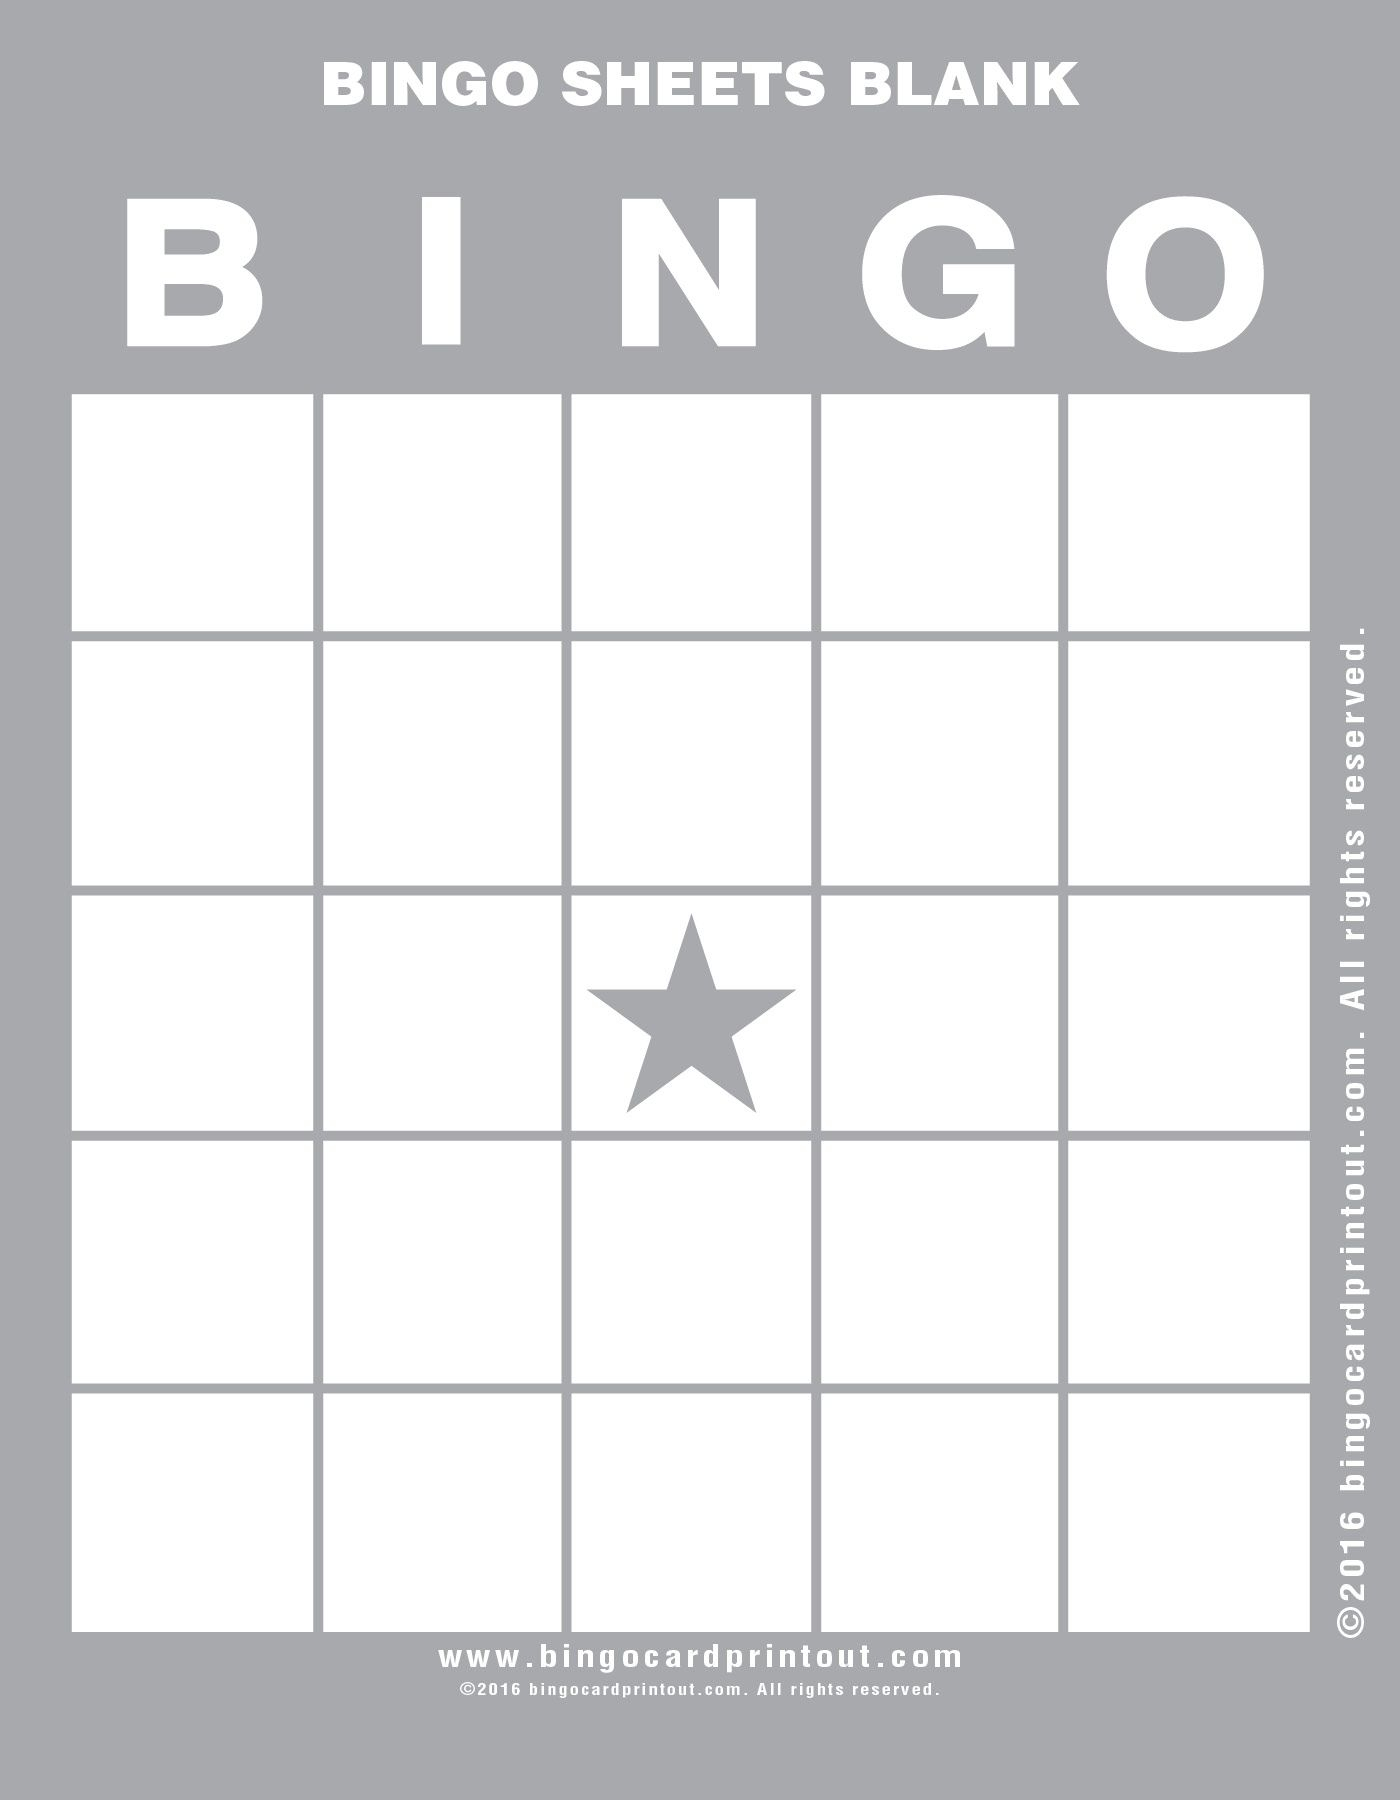 Bingo Sheets Blank | Bingo Sheets, Bingo Cards, Blank Bingo